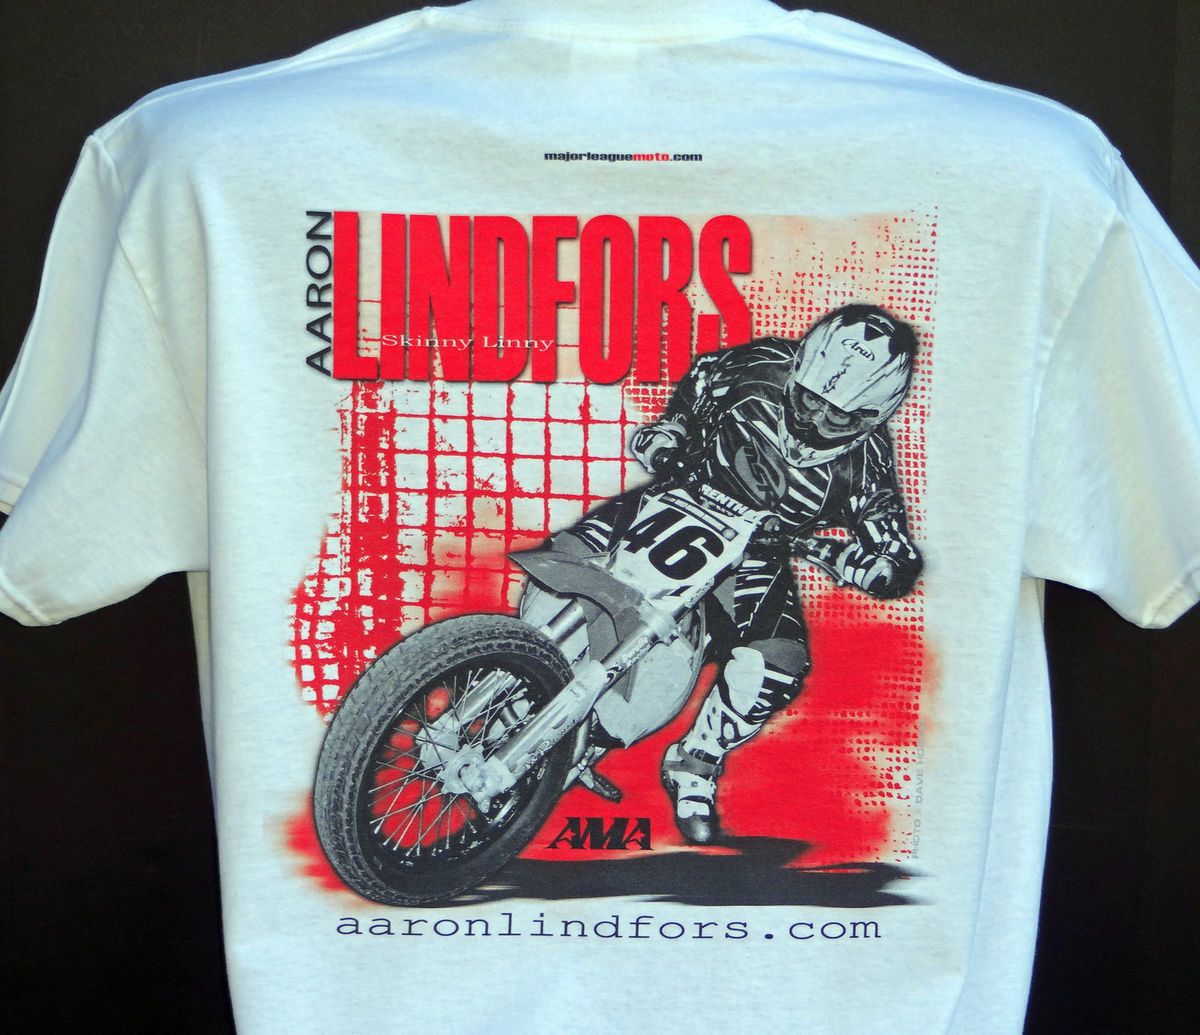 AMA Pro Flat Track Racing National No 46 Aaron Lindfors T Shirt